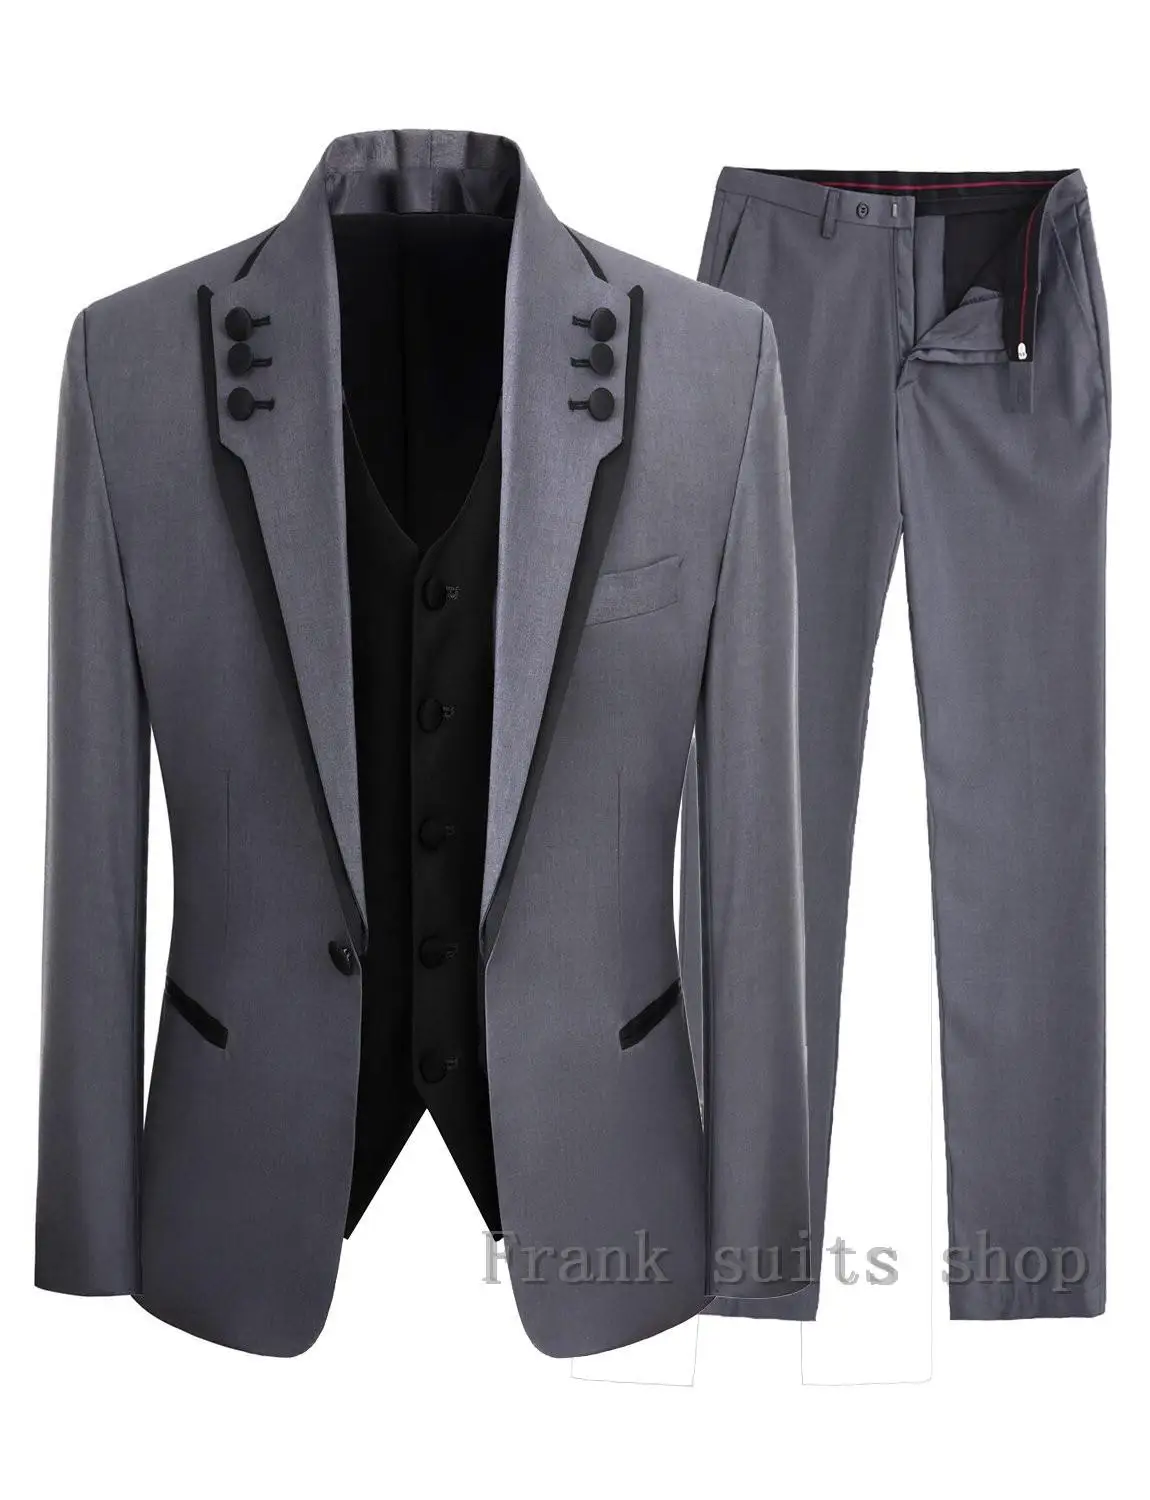 

3 Piece Gray Men Suits for Wedding Groom Tuxedos Casual Peaked Lapel Gentleman Man Suit Set Jacket Vest Pants